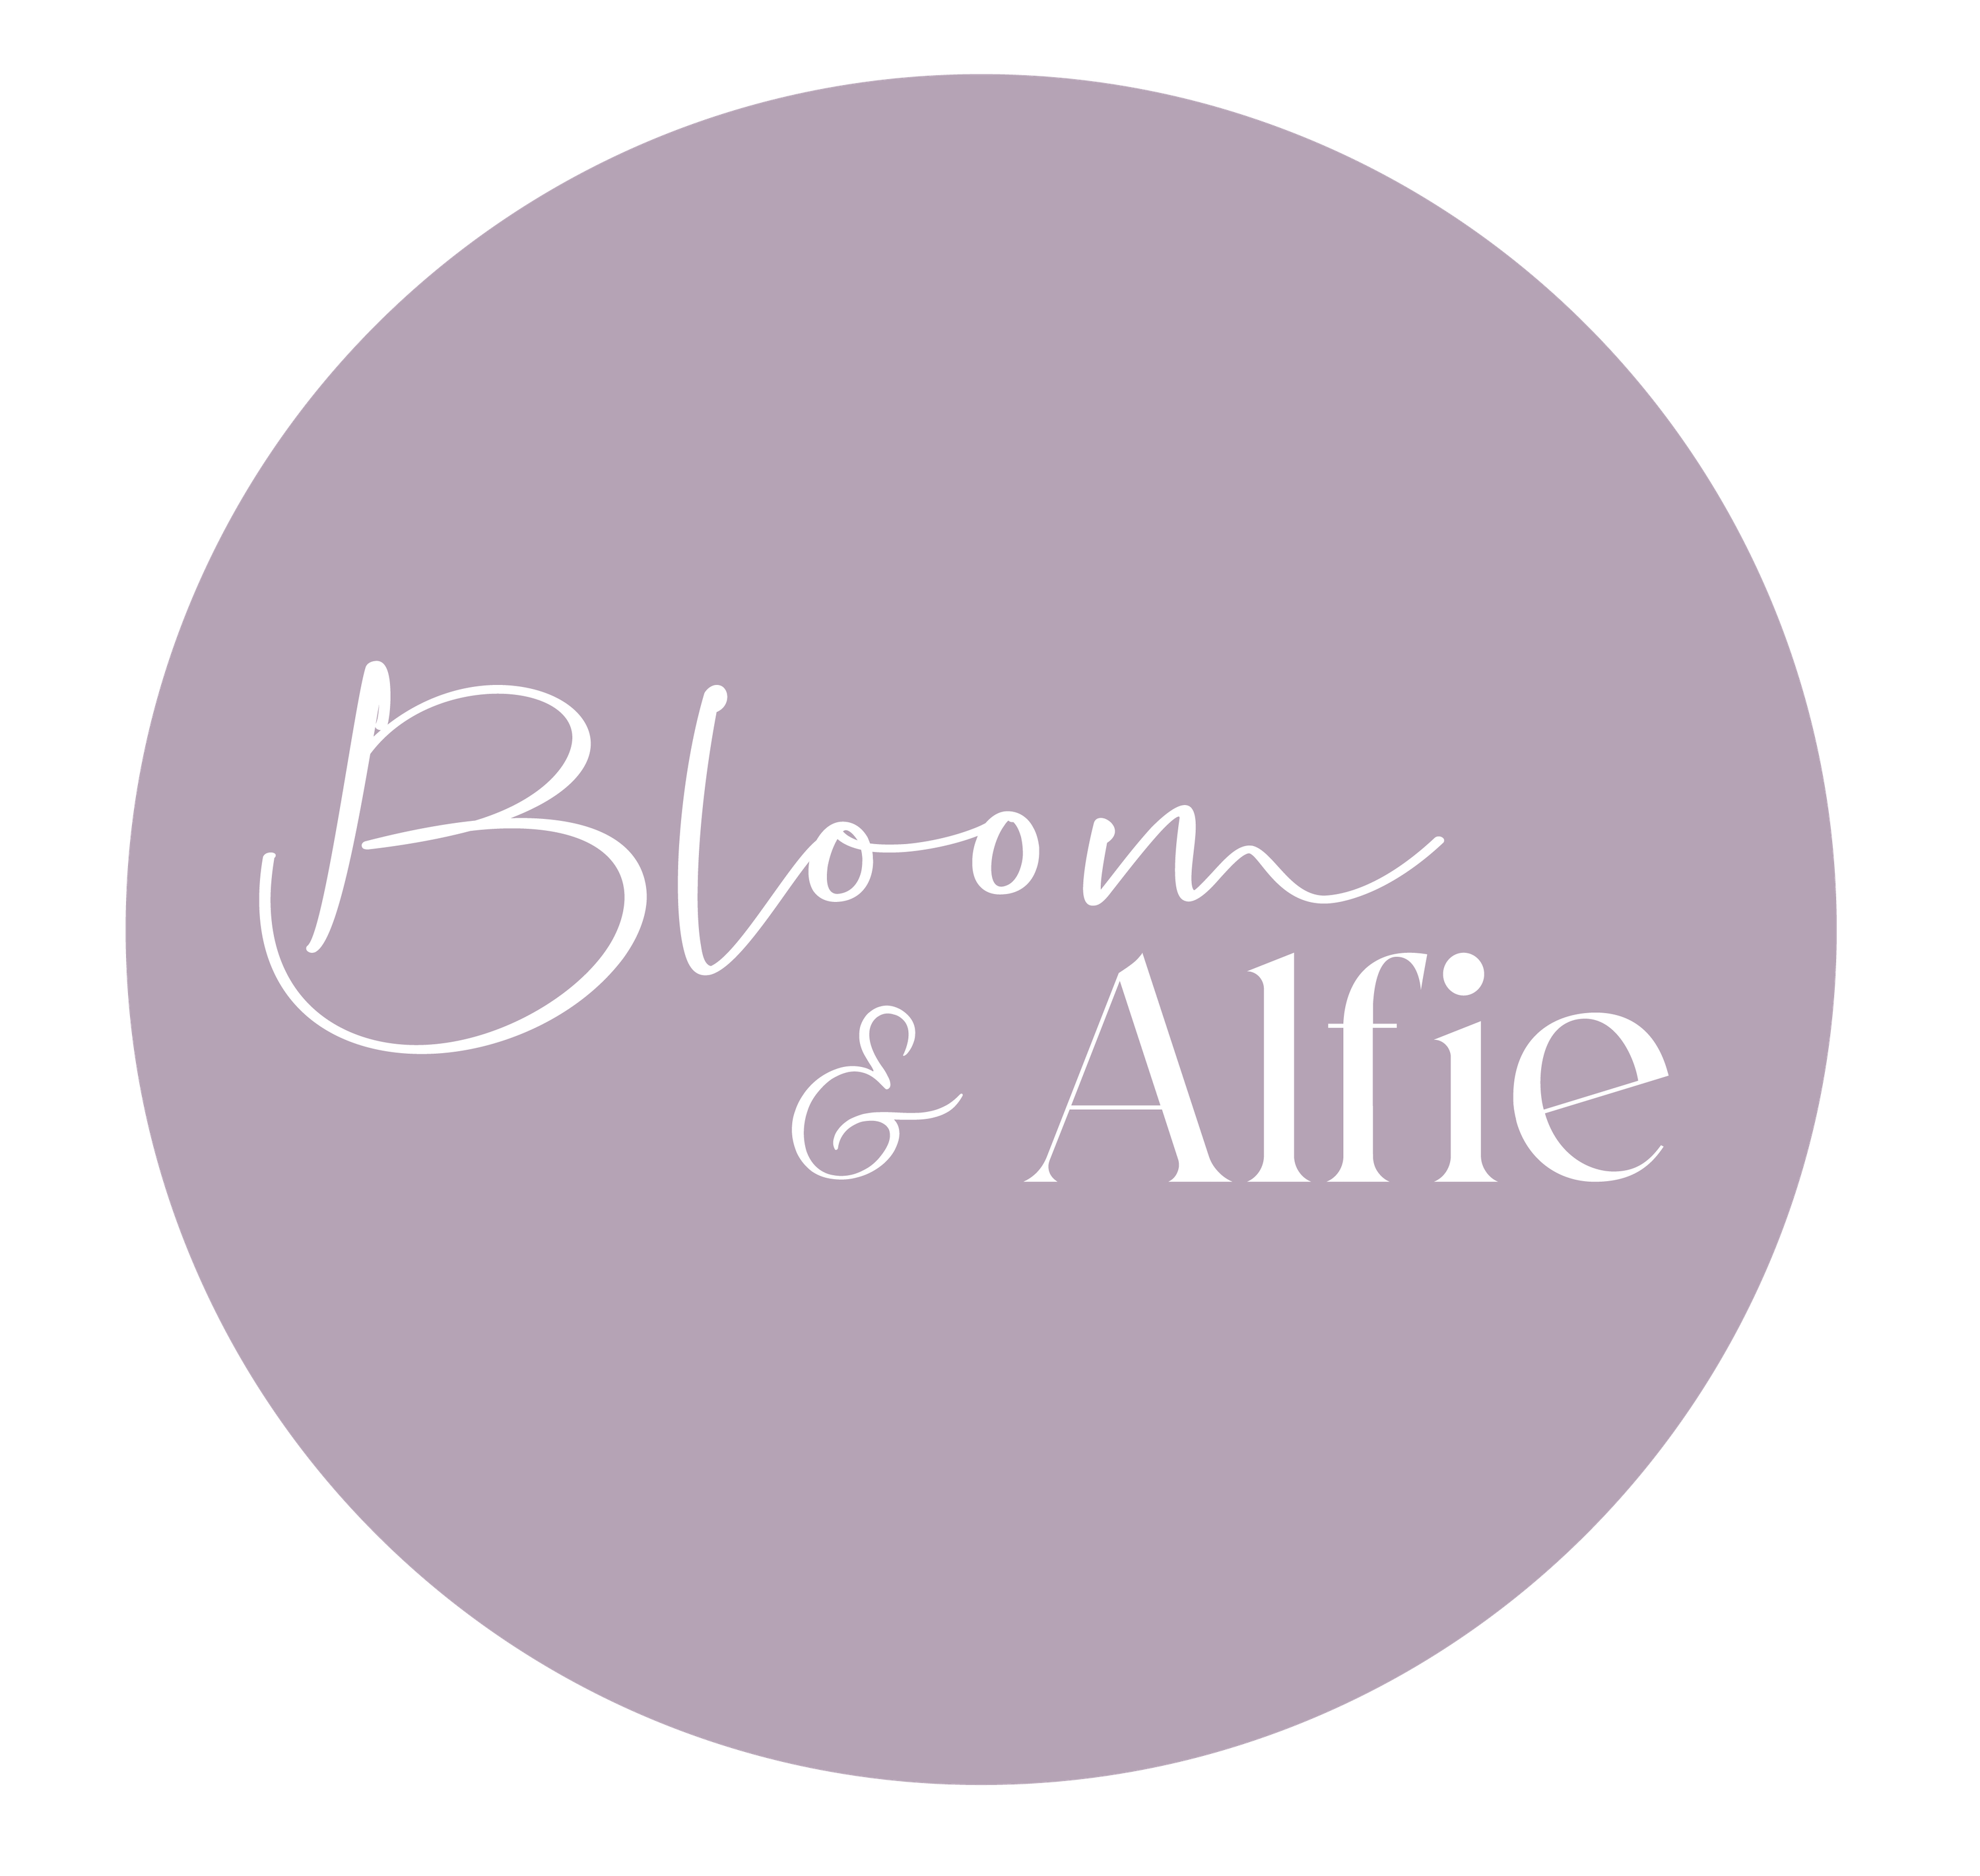 Bloom and Alfie's logo